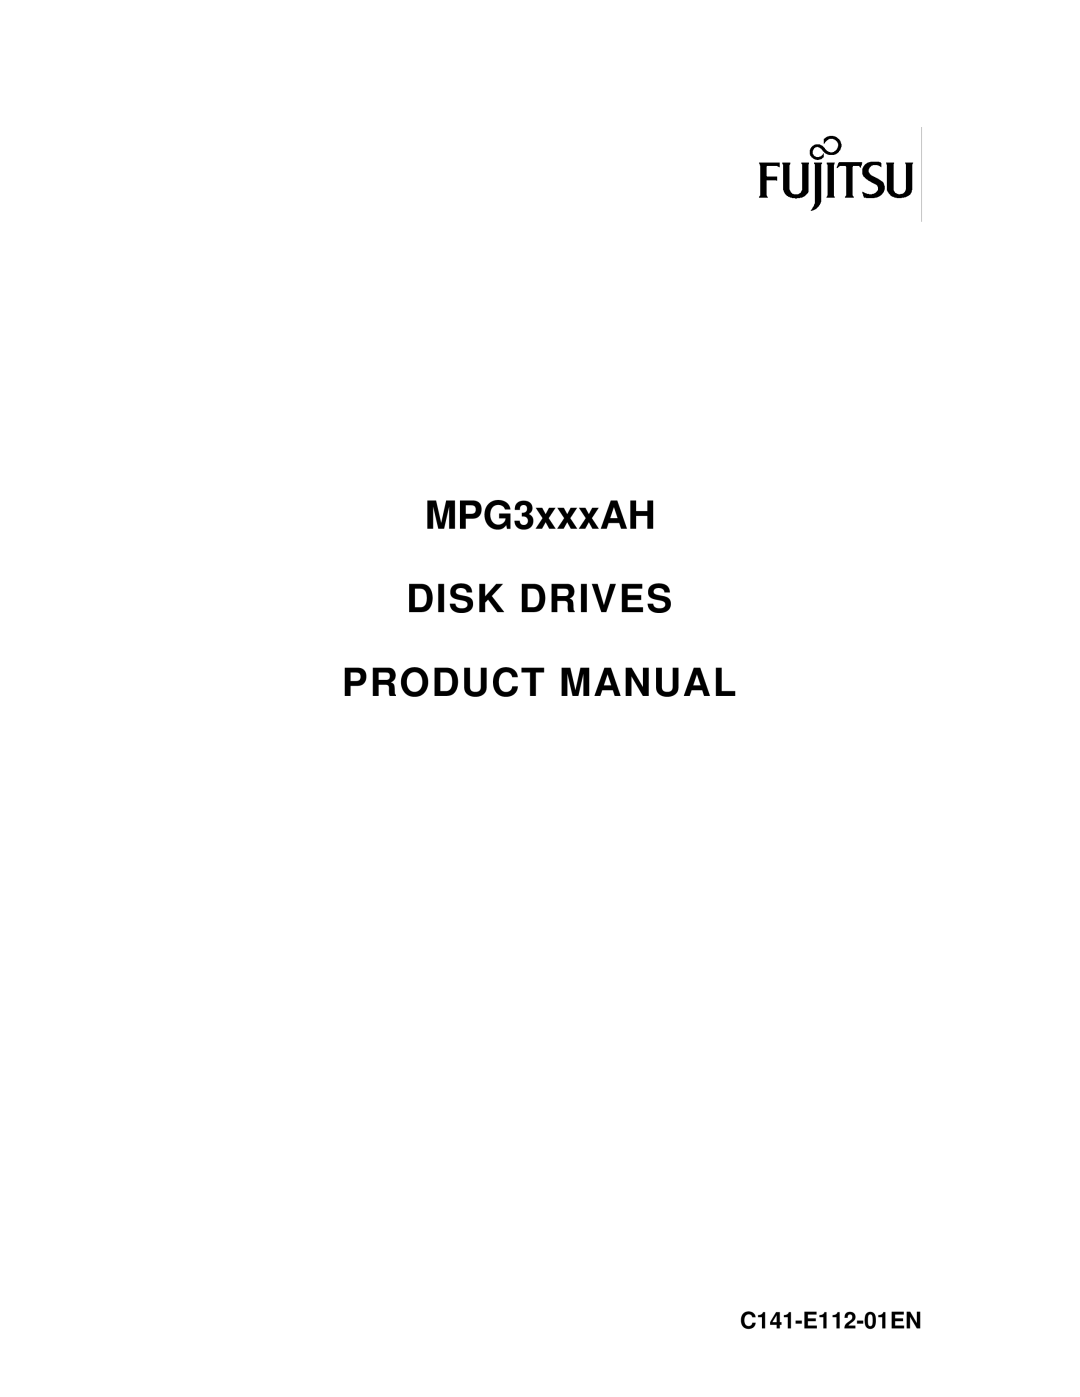 Fujitsu MPG3XXXAH manual MPG3xxxAH DISK DRIVES PRODUCT MANUAL, C141-E112-01EN 